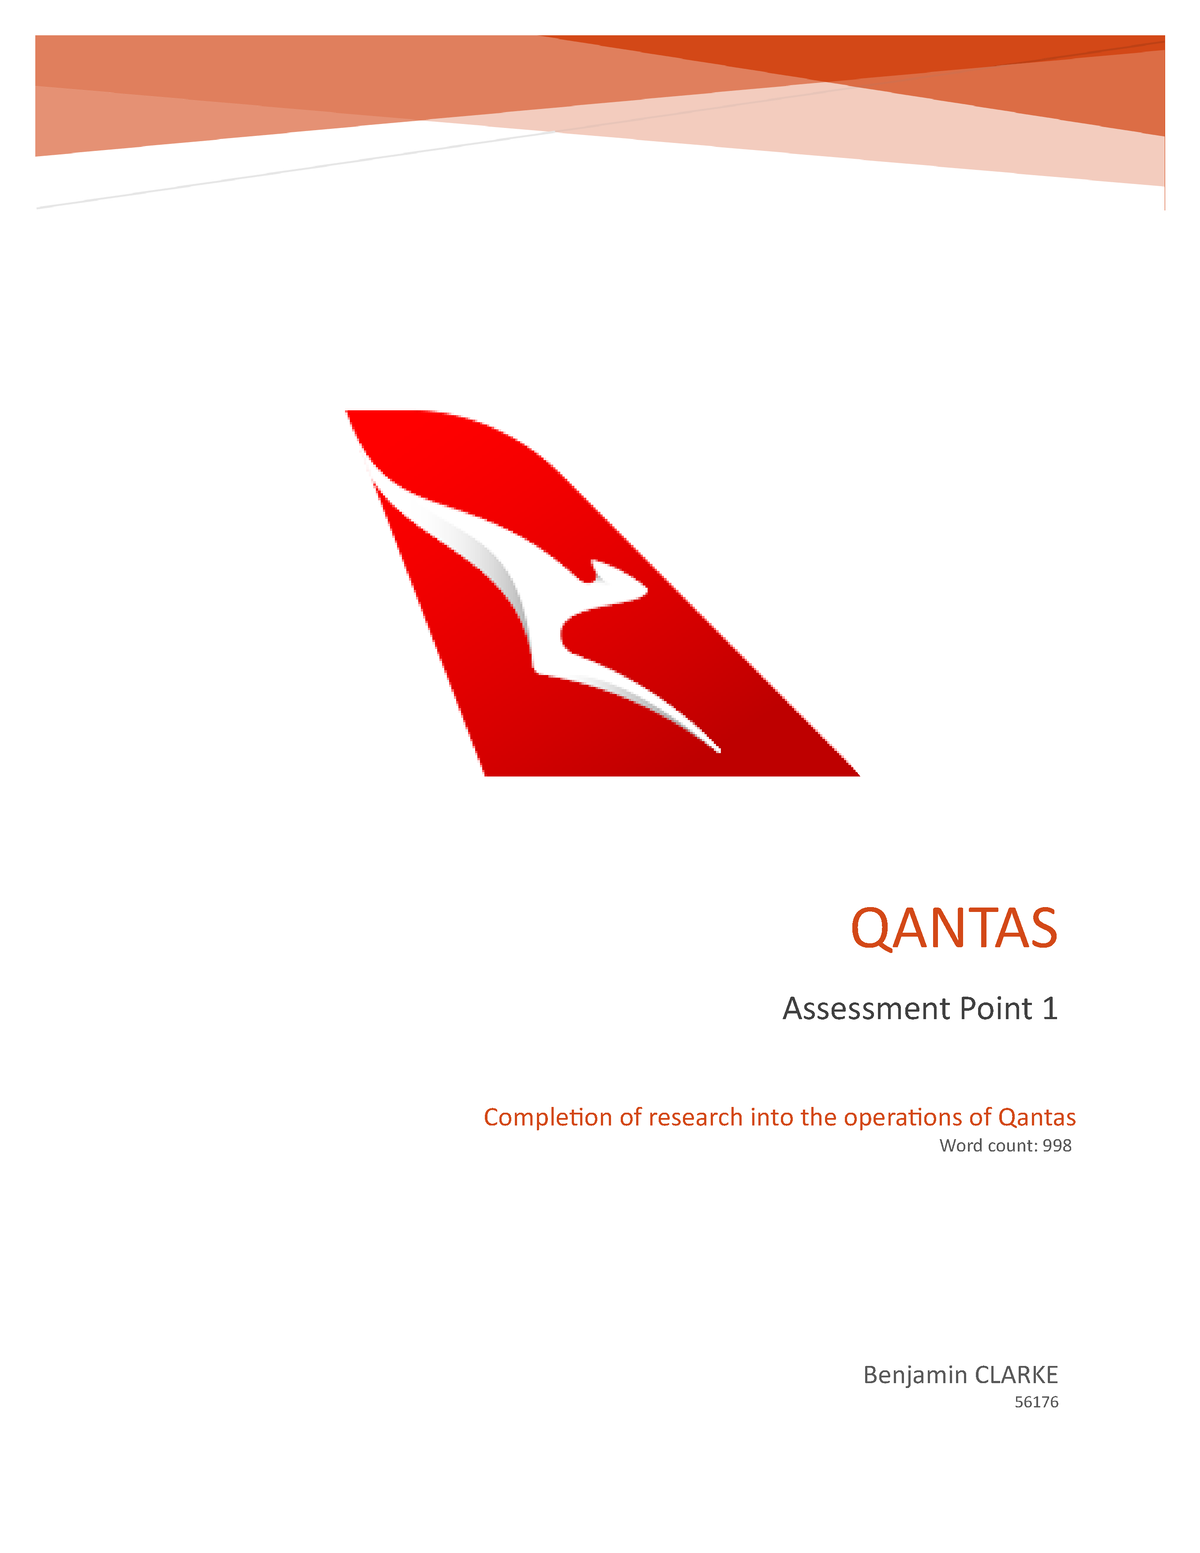 qantas case study business studies